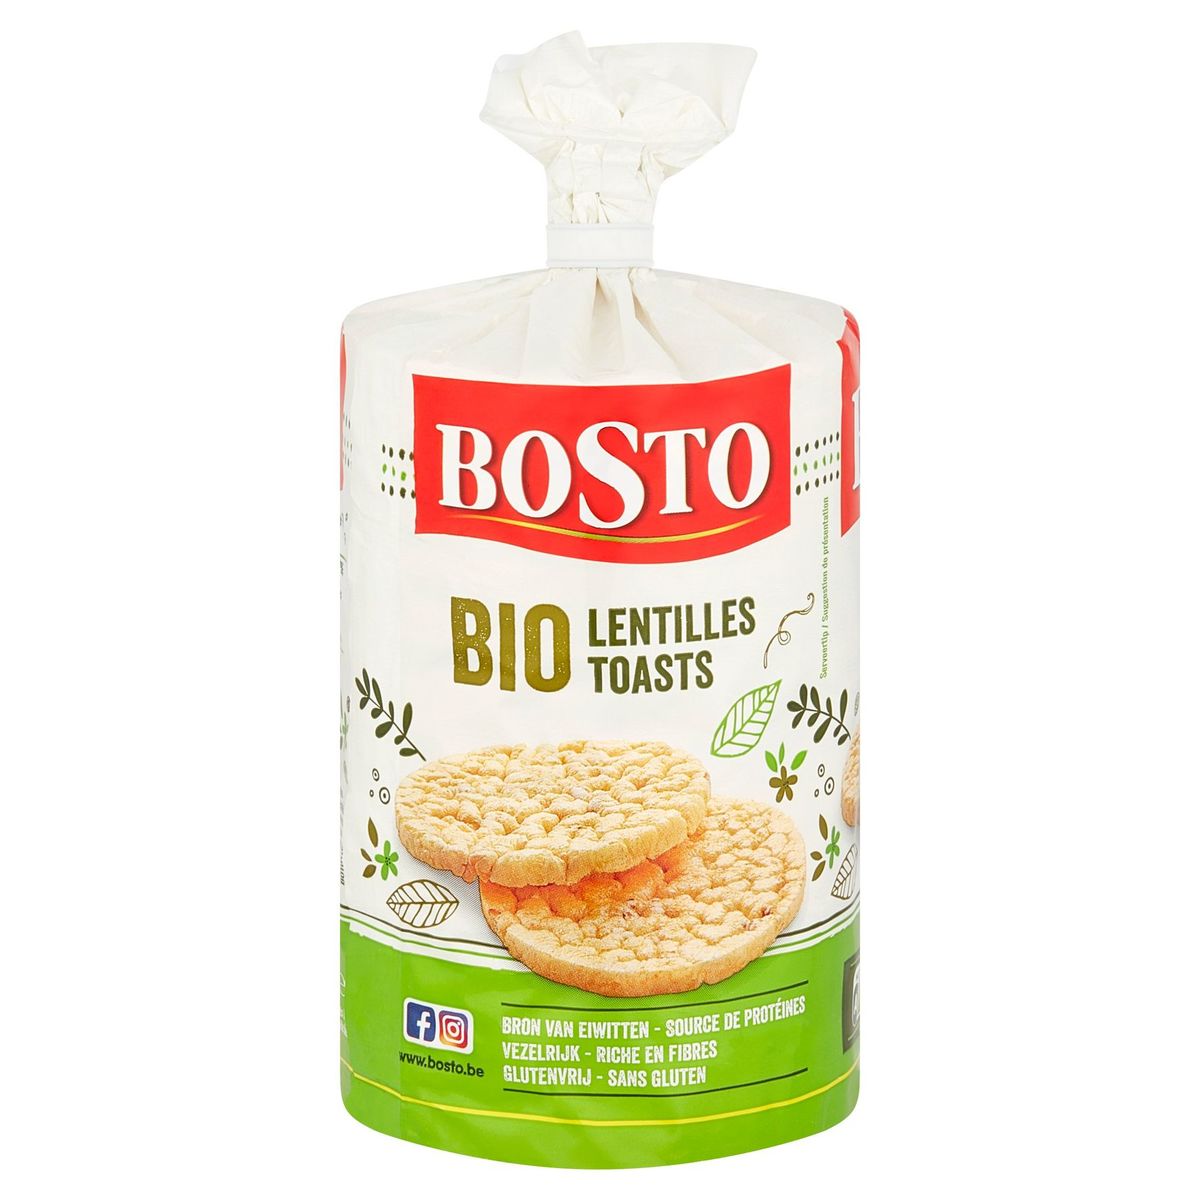 Bosto Bio Lentilles Toasts 100 g